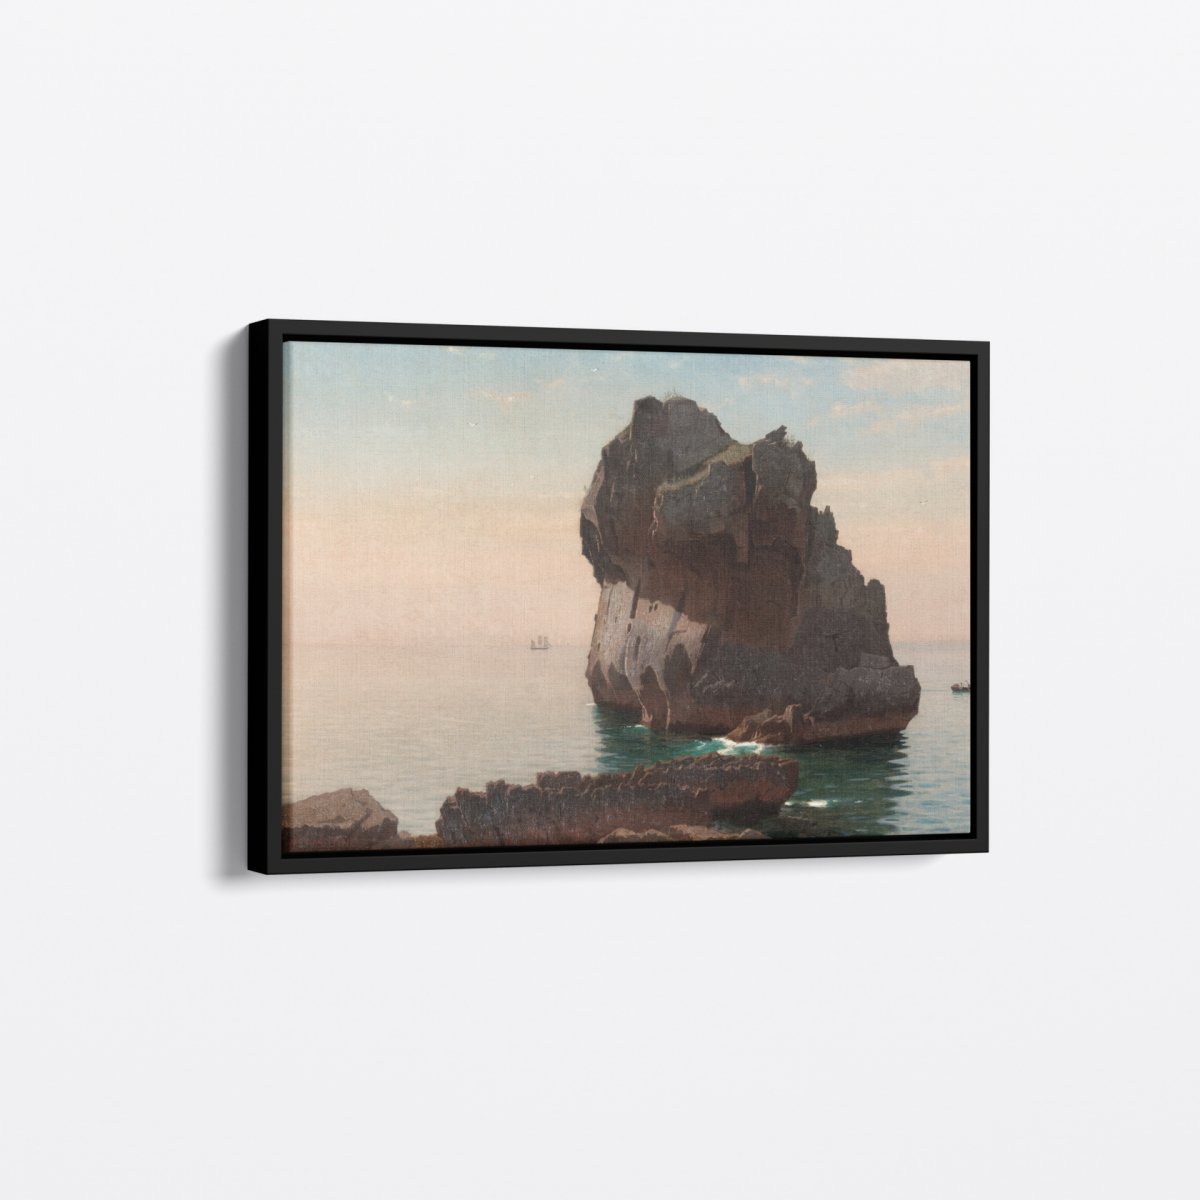 Separated from Capri | William Haseltine | Ave Legato | Canvas Art Prints | Vintage Artwork